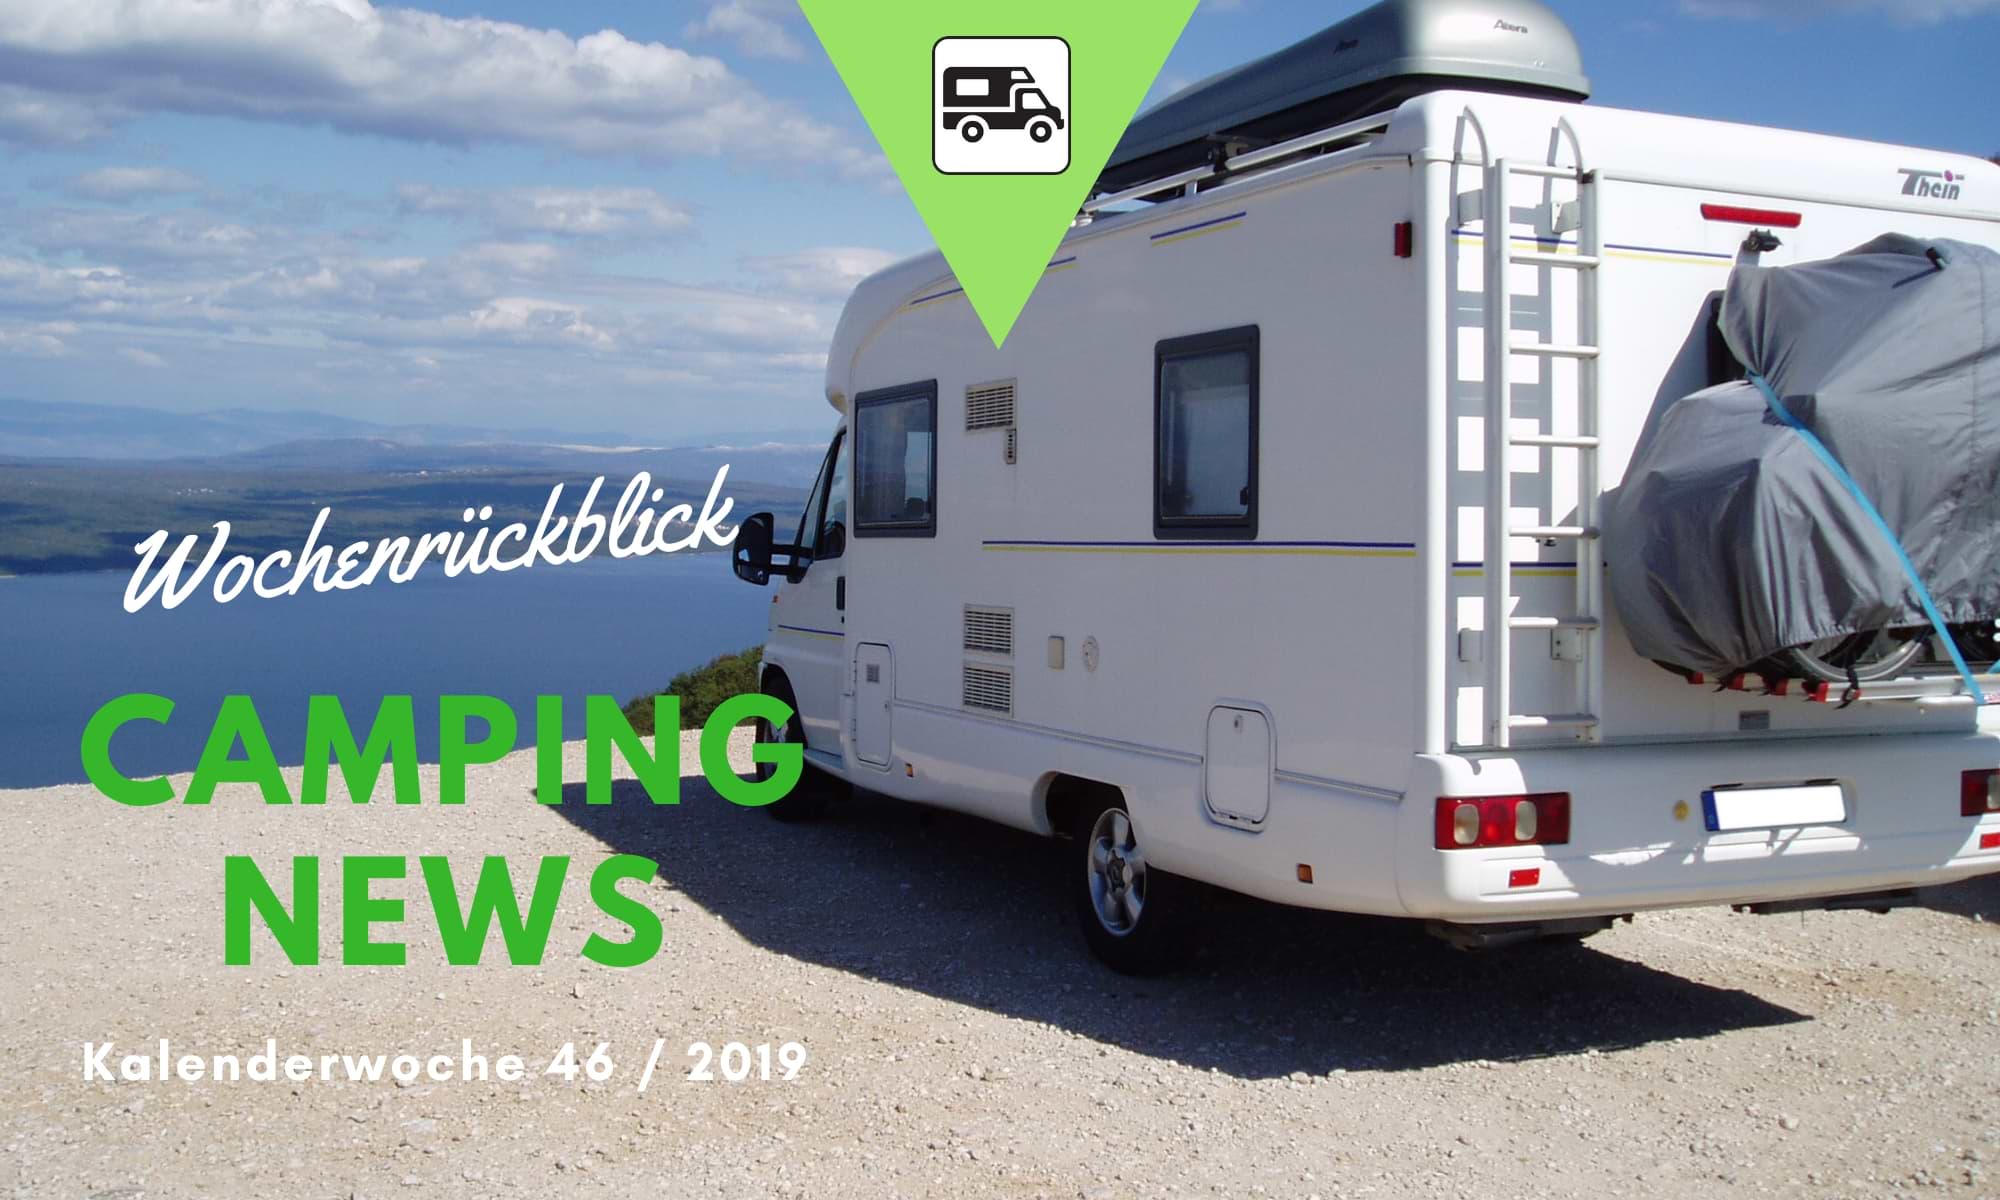 Wochenrückblick Camping News KW46-2019